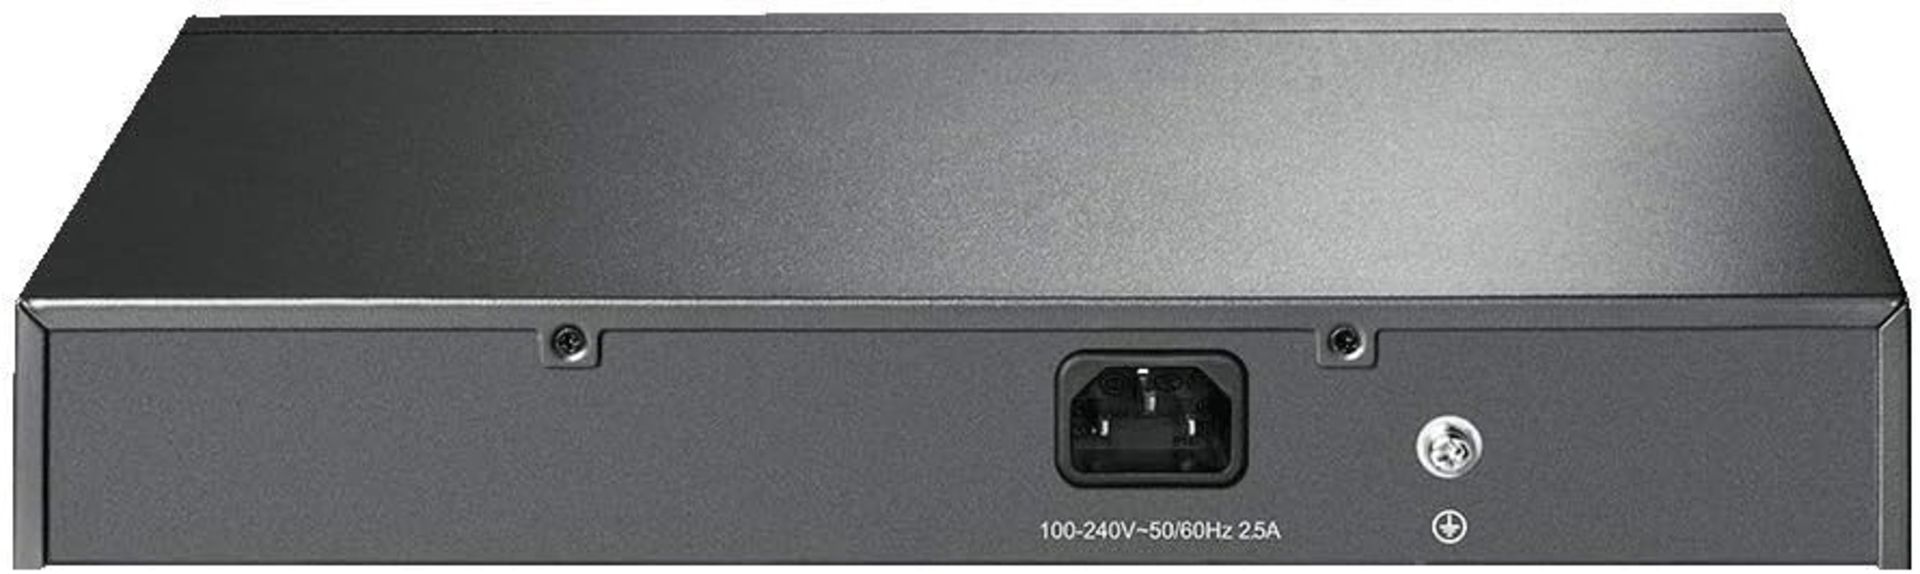 BRAND NEW FACTORY SEALED TP-LINK 8-Port Gigabit Desktop/Rackmount Switch with 8-Port PoE+. RRP £99. - Image 3 of 4